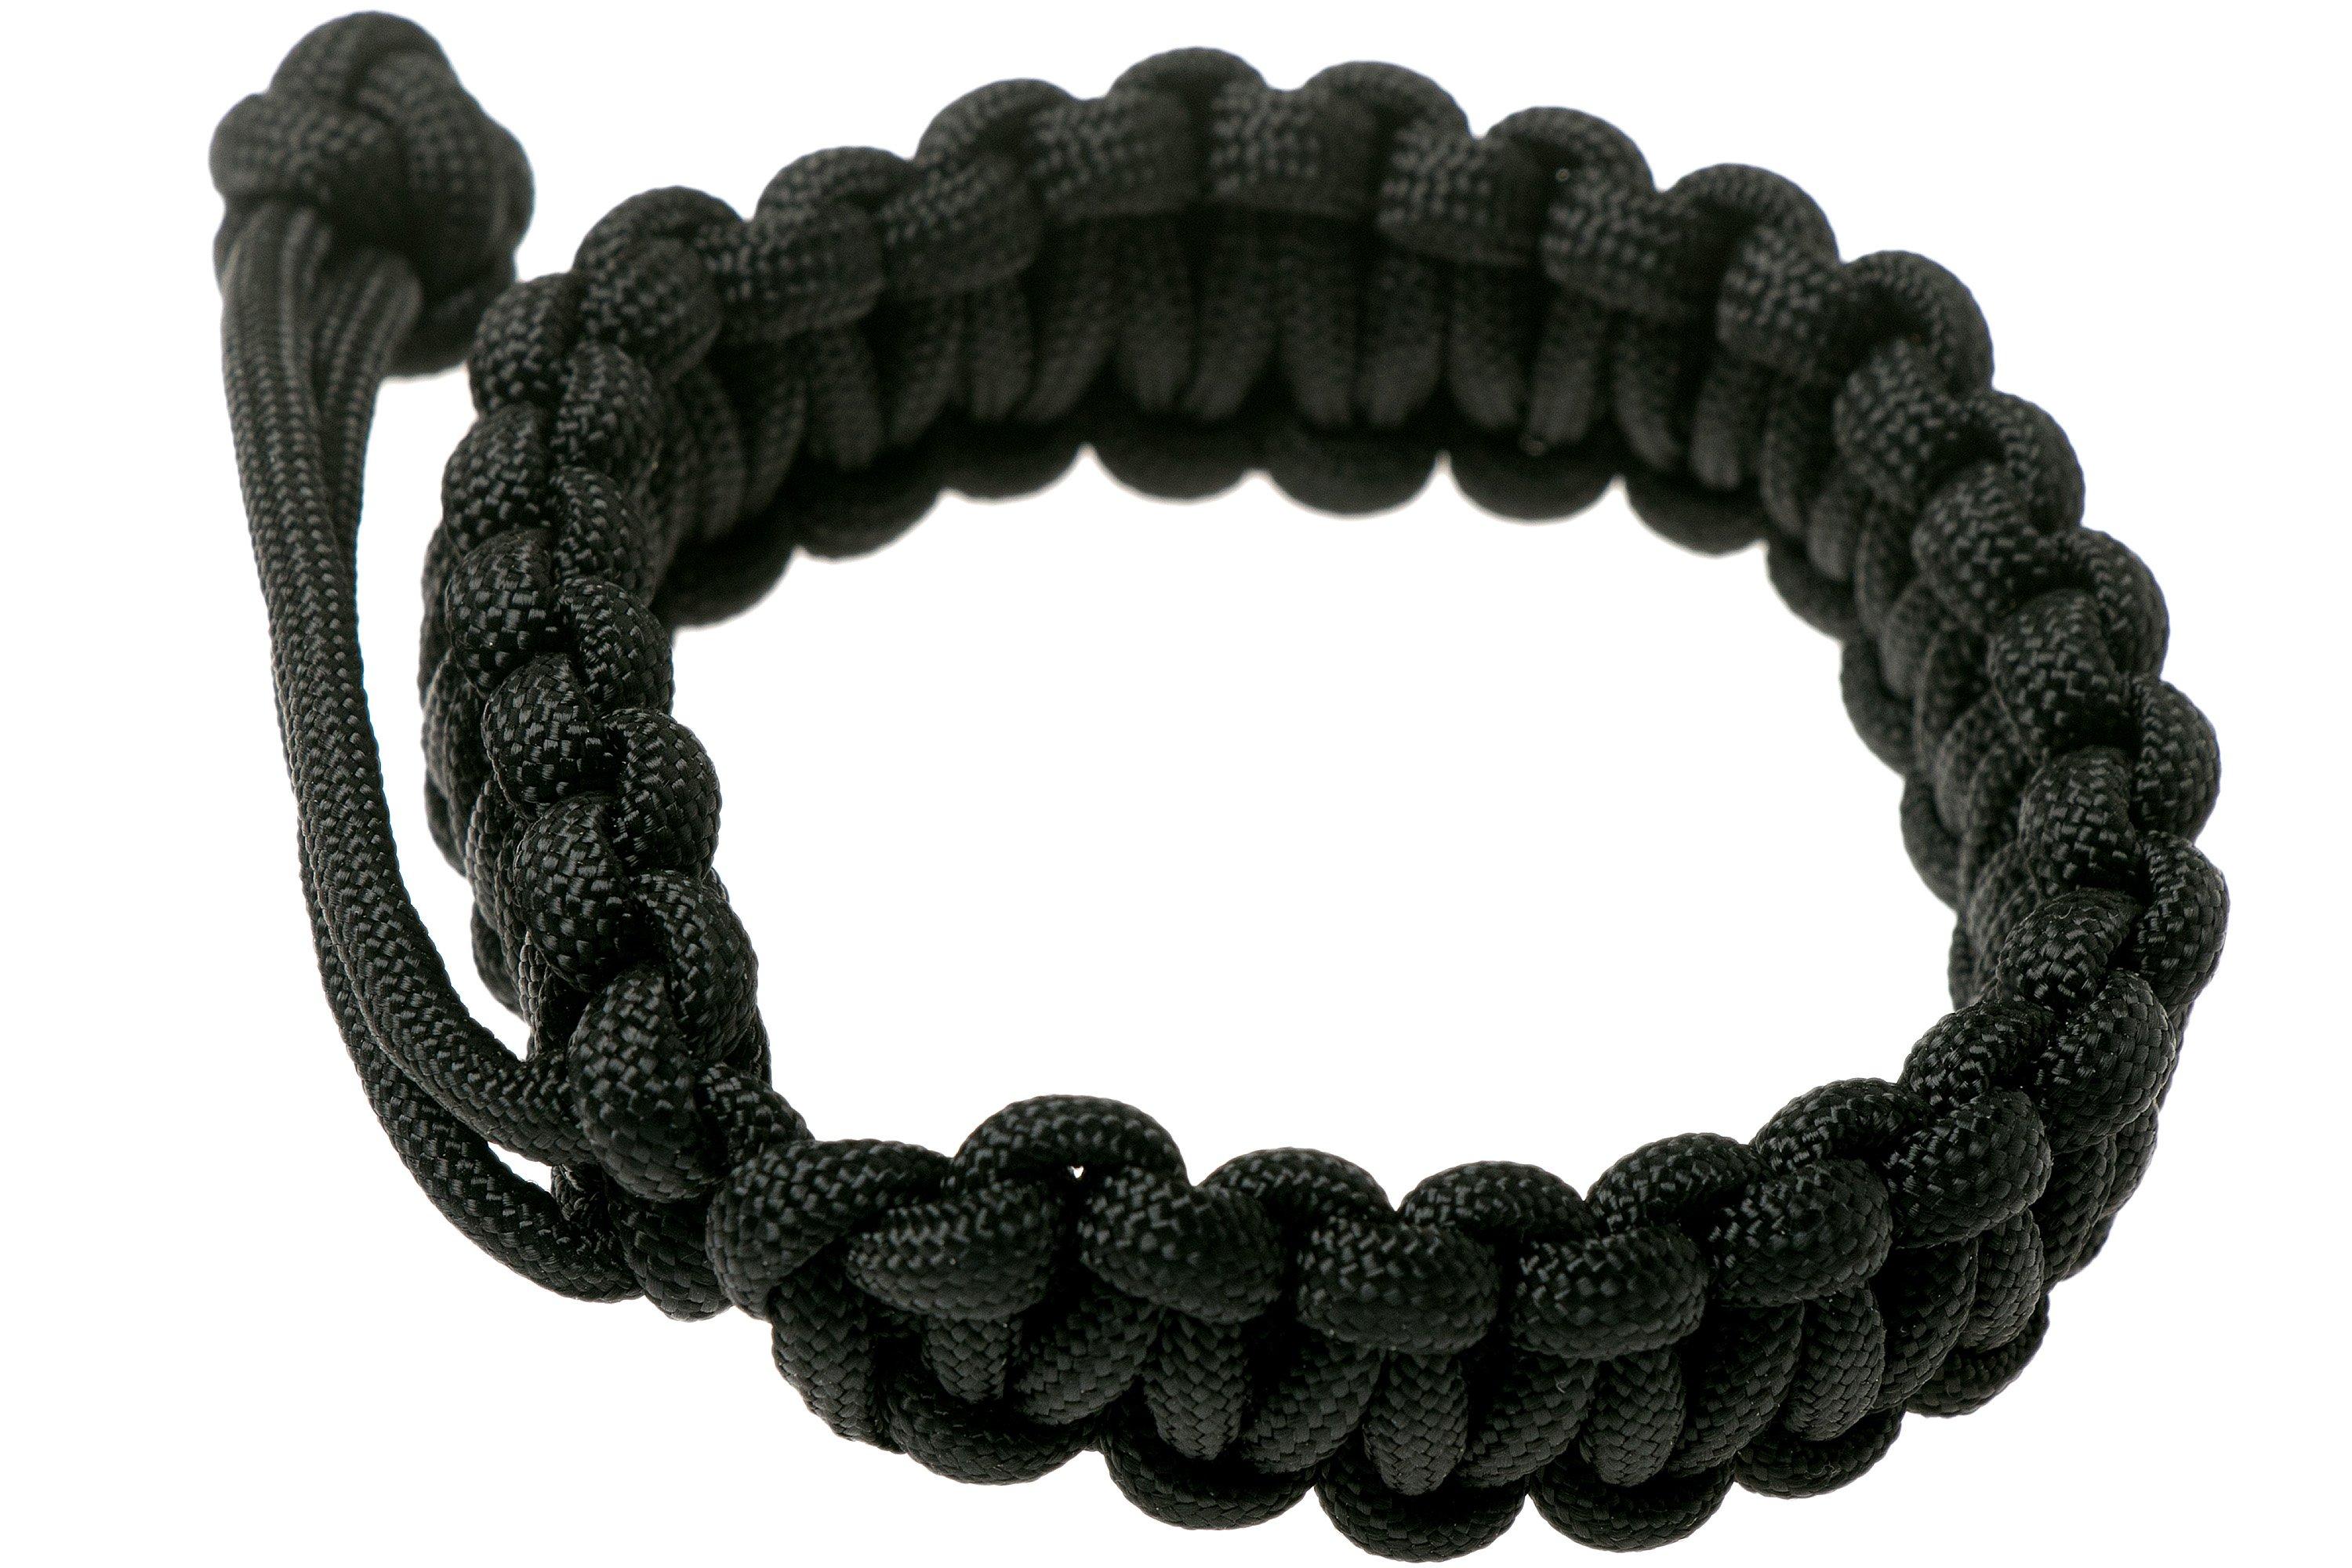 Knivesandtools paracord bracelet cobra wave, black, size cm | Advantageously shopping at Knivesandtools.com